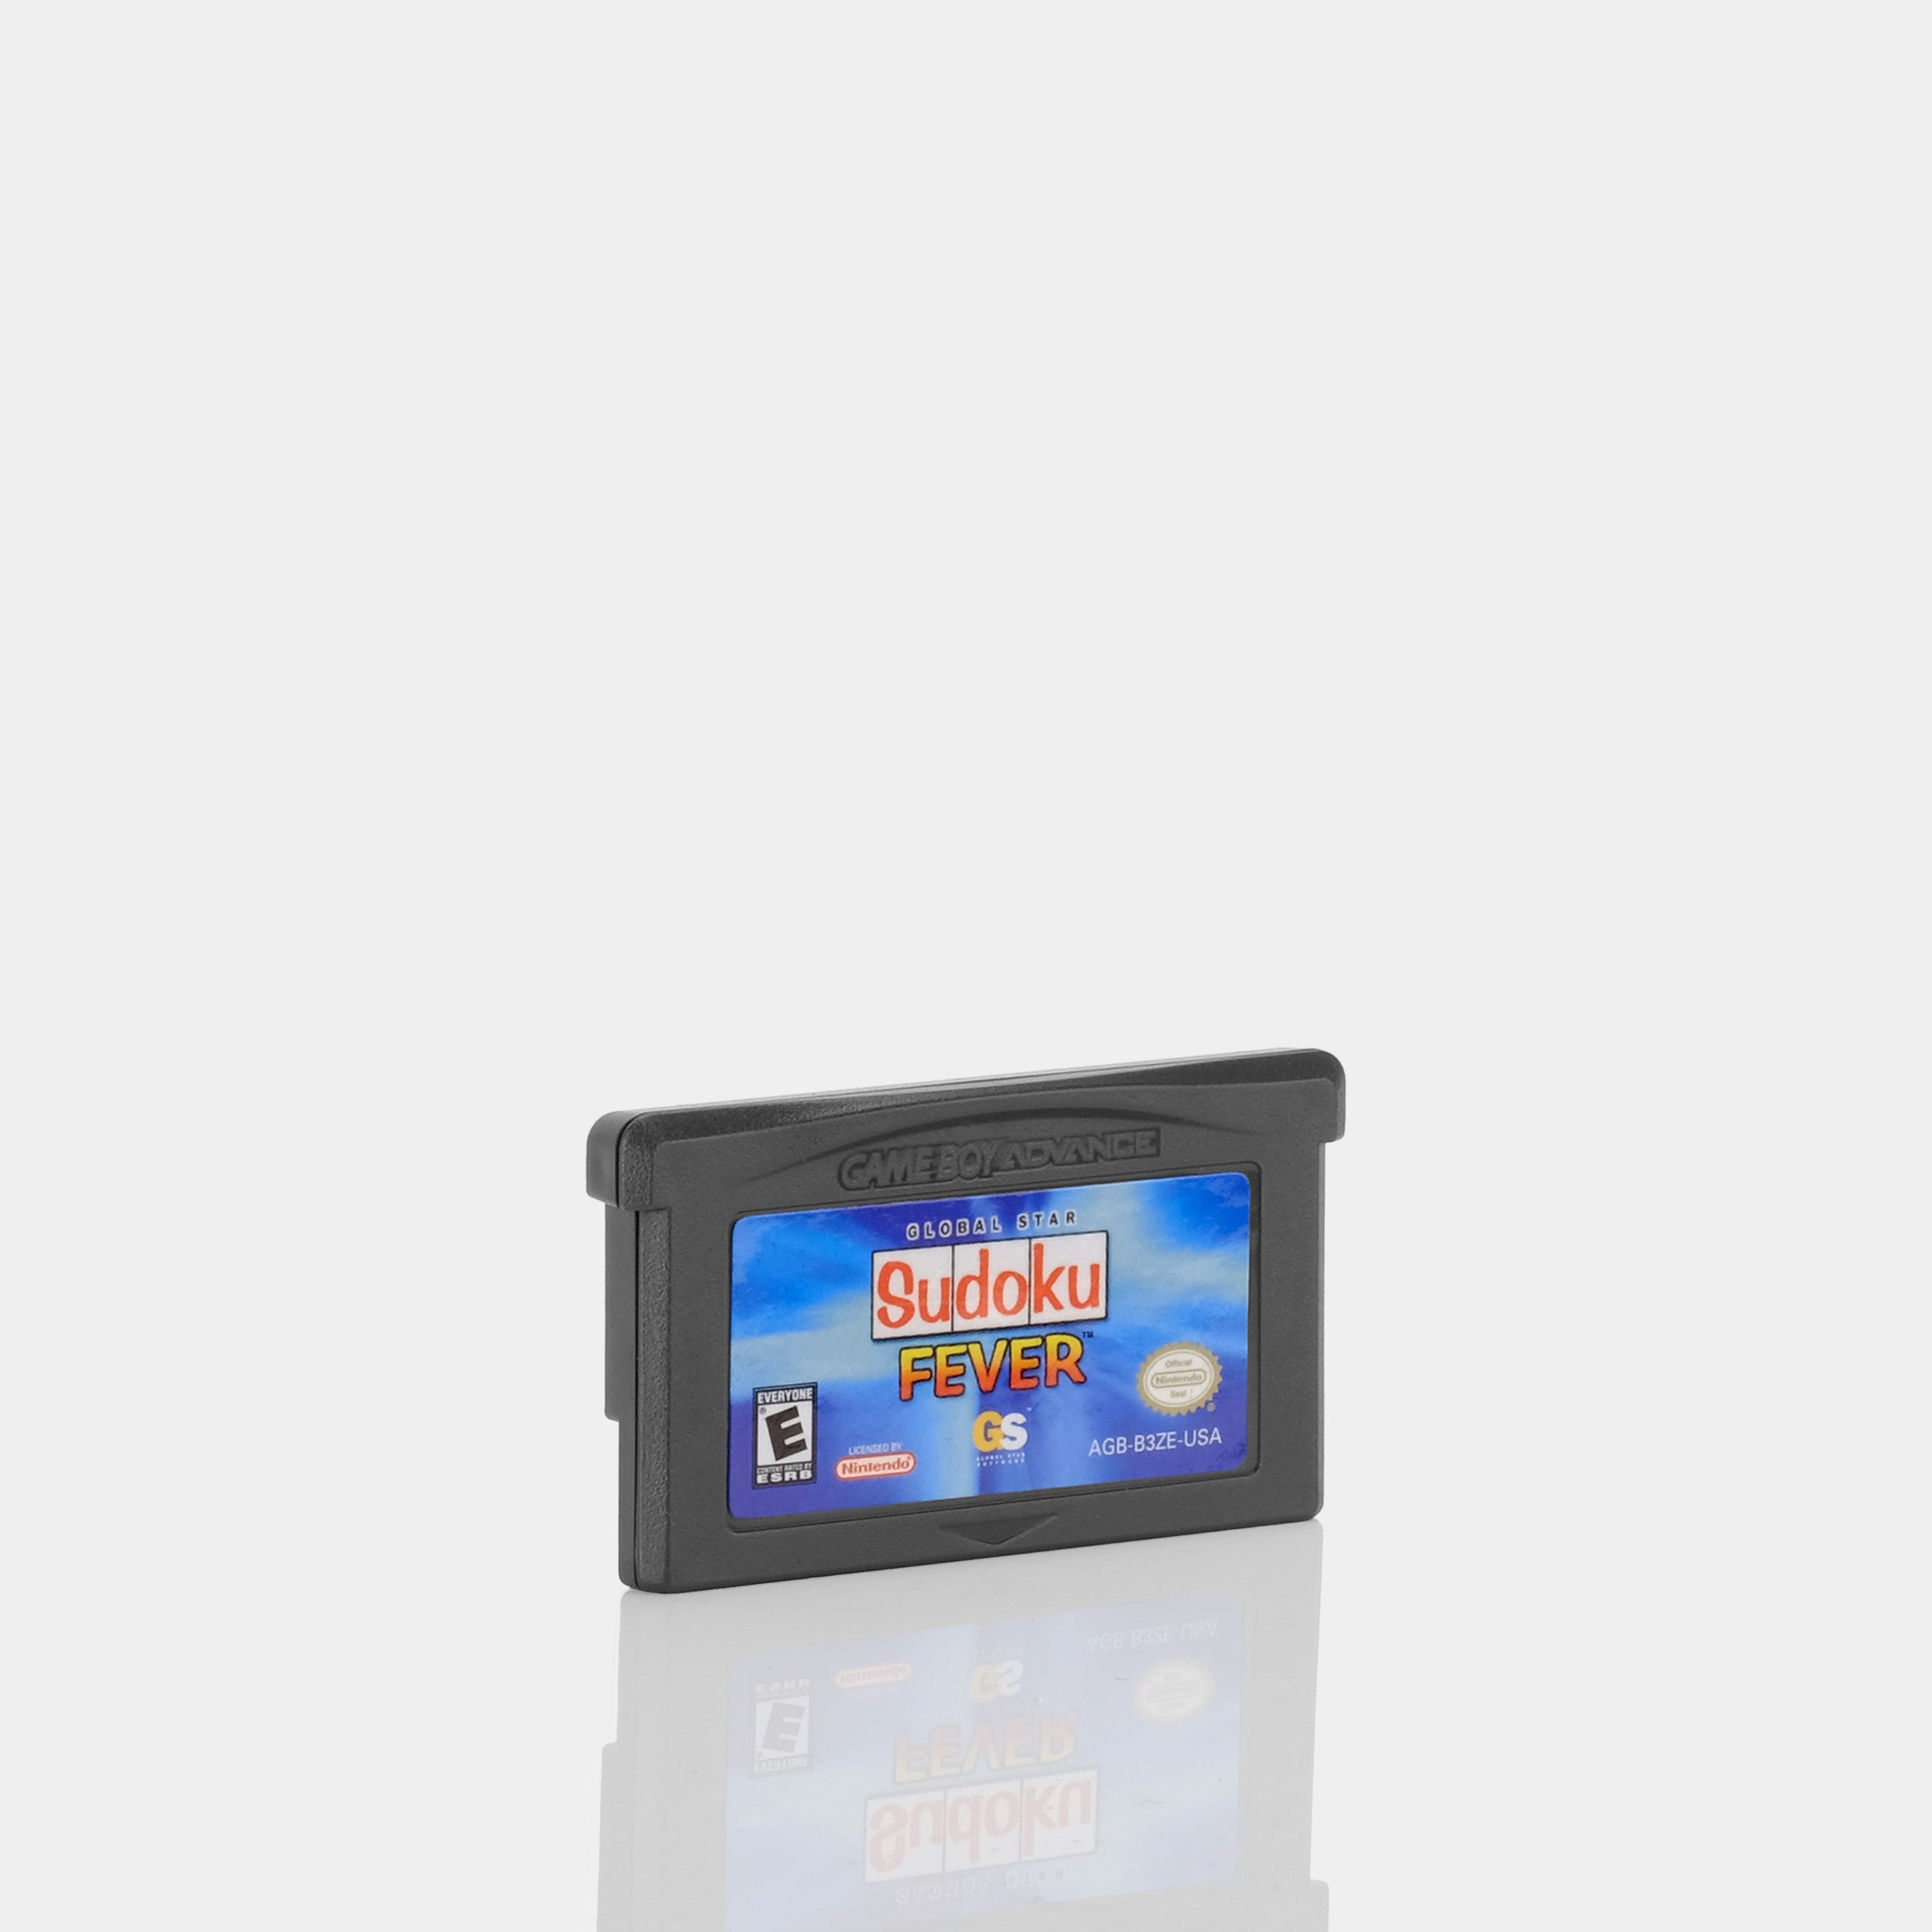 Global Star Sudoku Fever Game Boy Advance Game